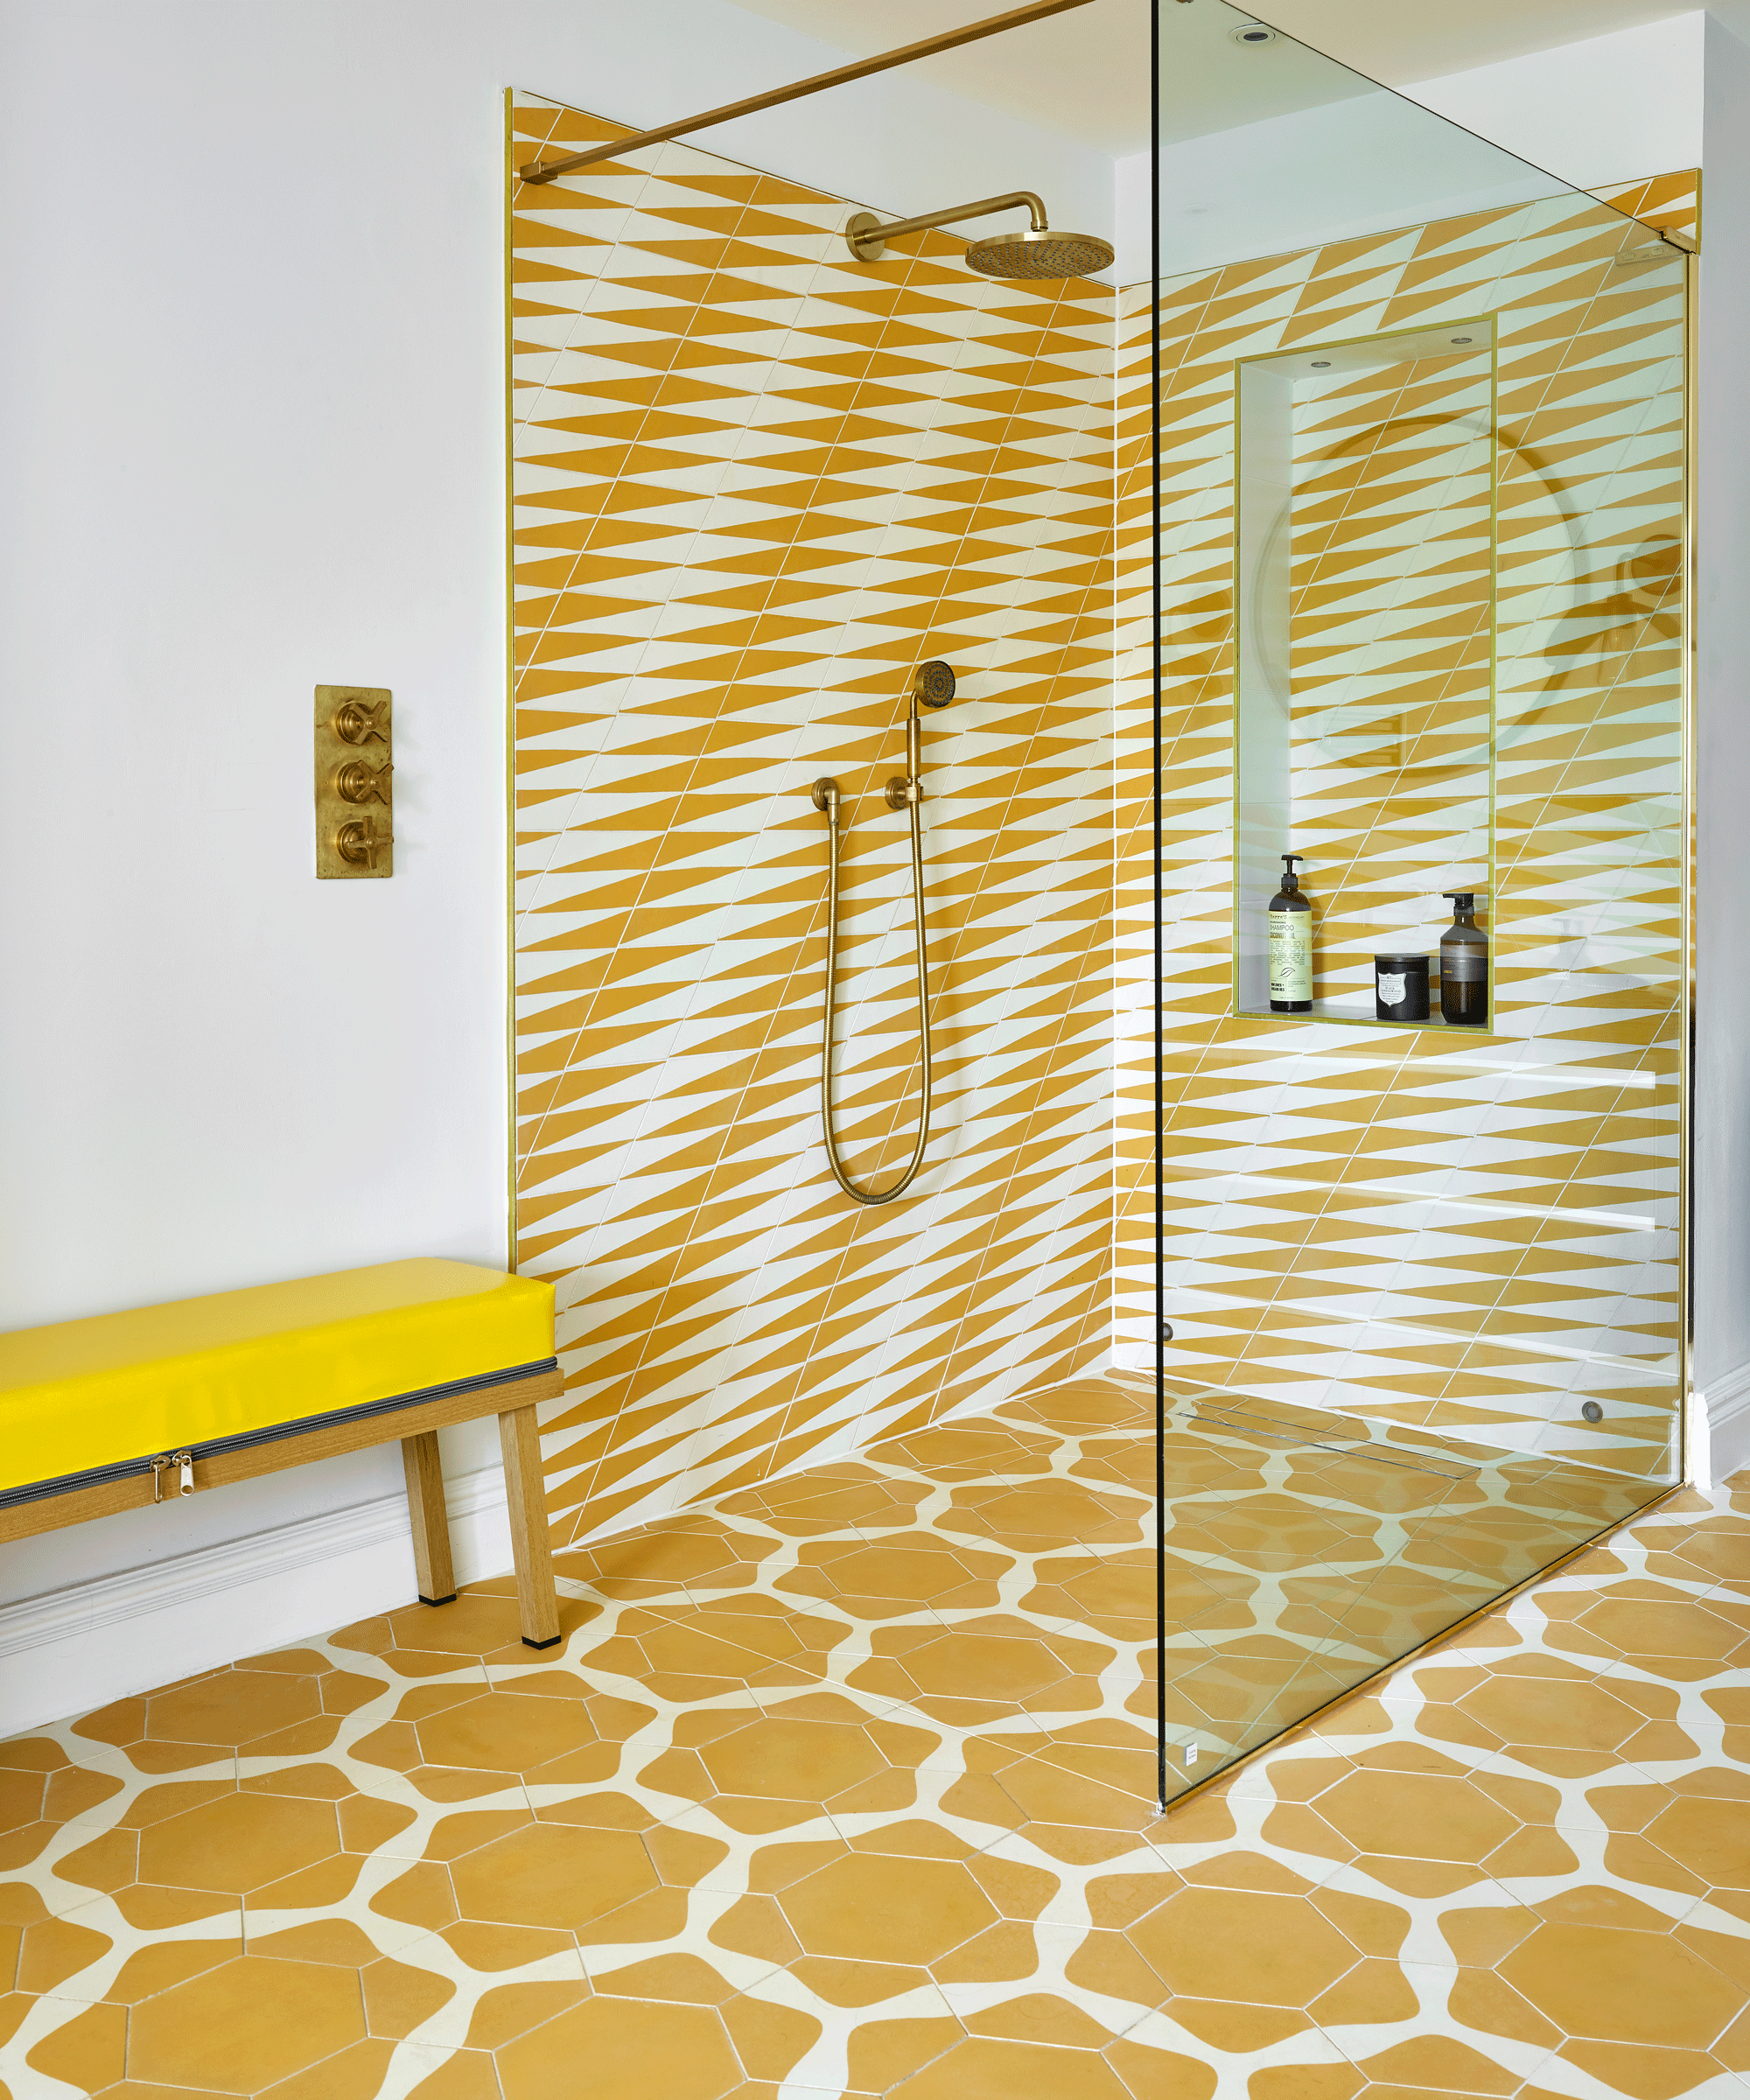 Clashing yellow pattern tiles in shower